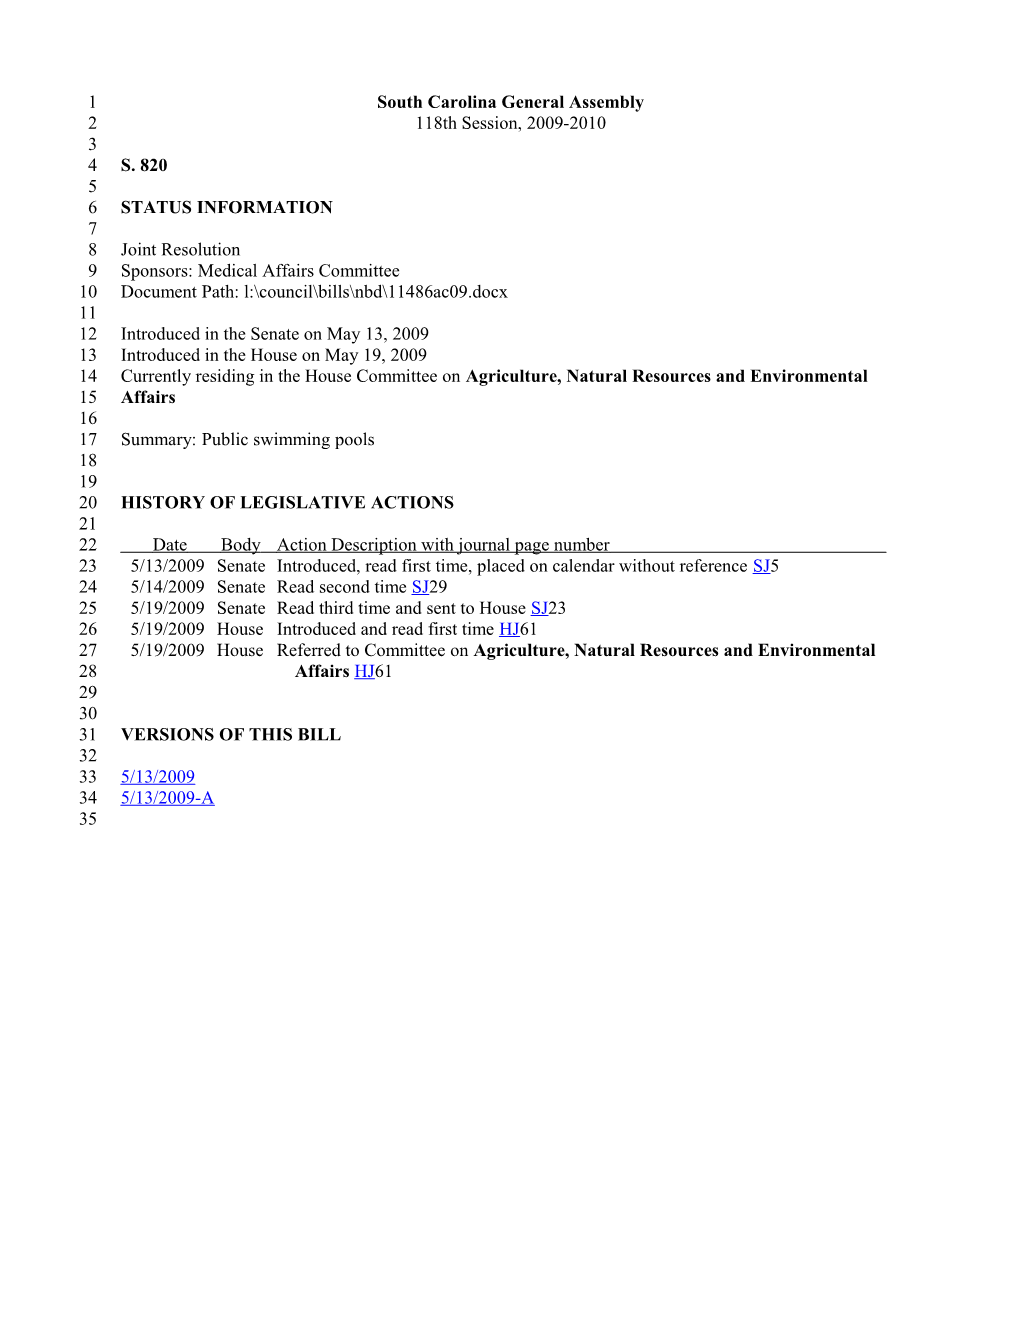 2009-2010 Bill 820: Public Swimming Pools - South Carolina Legislature Online